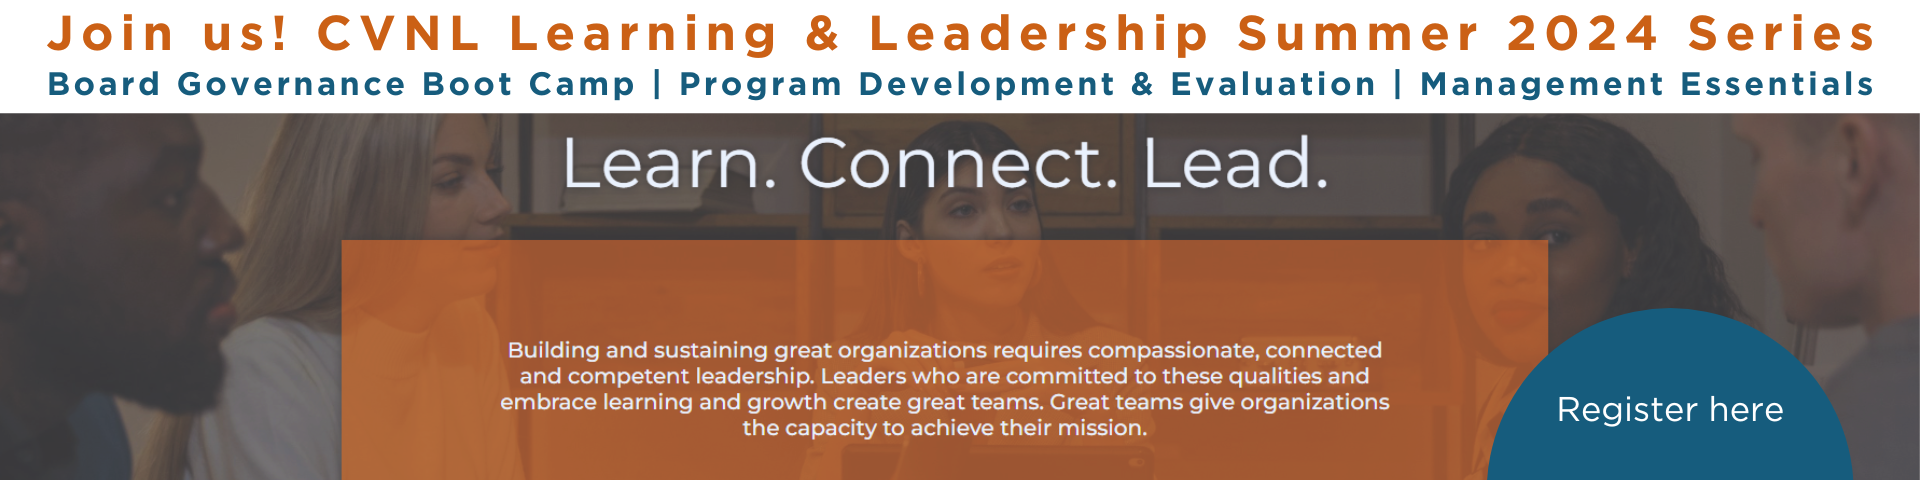 CVNL Learning & Leadership Summer 2024 Professional Development Series